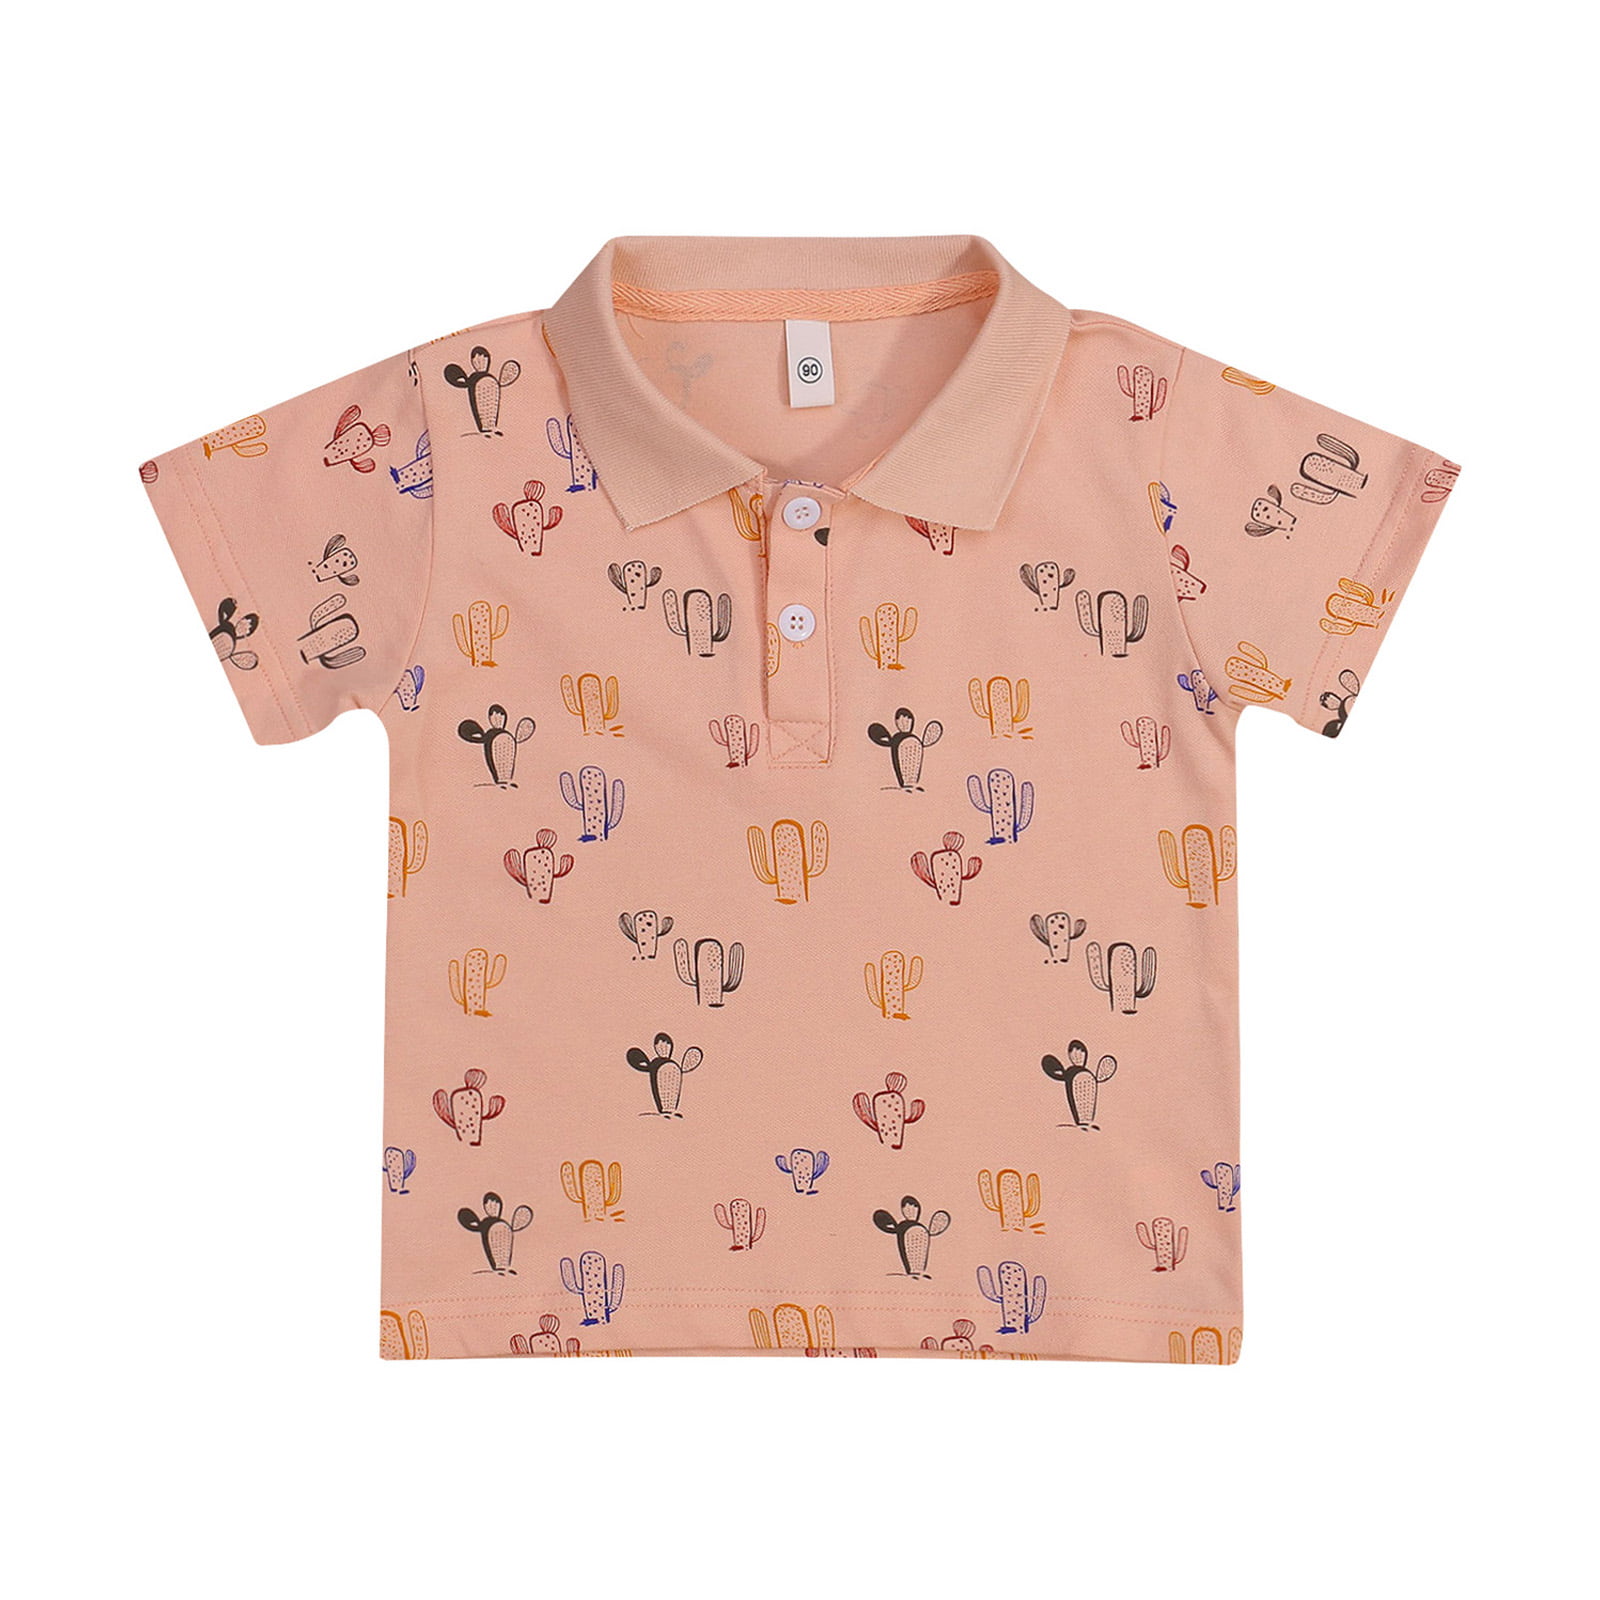 AIDEAONE Baby Boys Cartoon Dinosaur Print Shirt Button Down Short Sleeve Shirts Age 2-8 